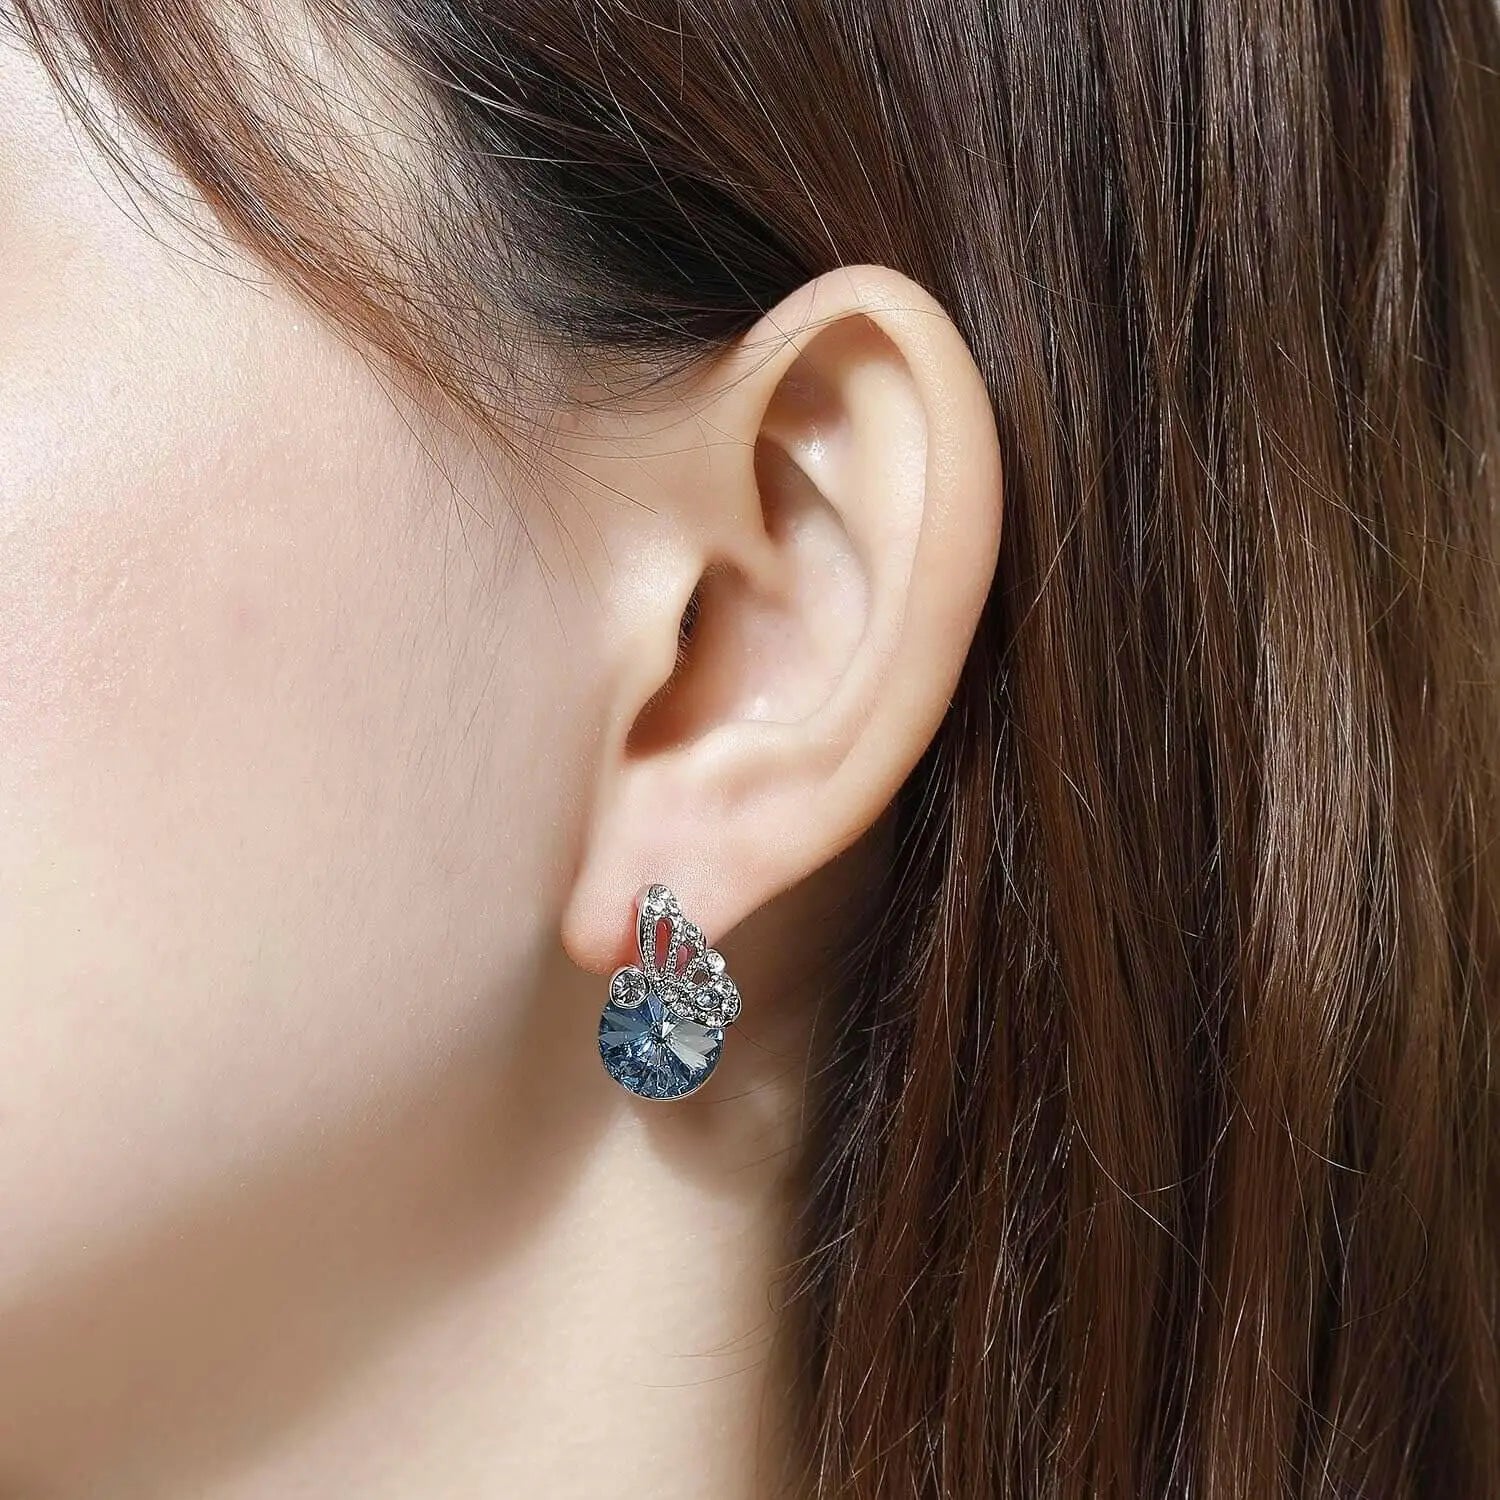 KRUCKEL butterfly earrings made with Swarovski Crystal